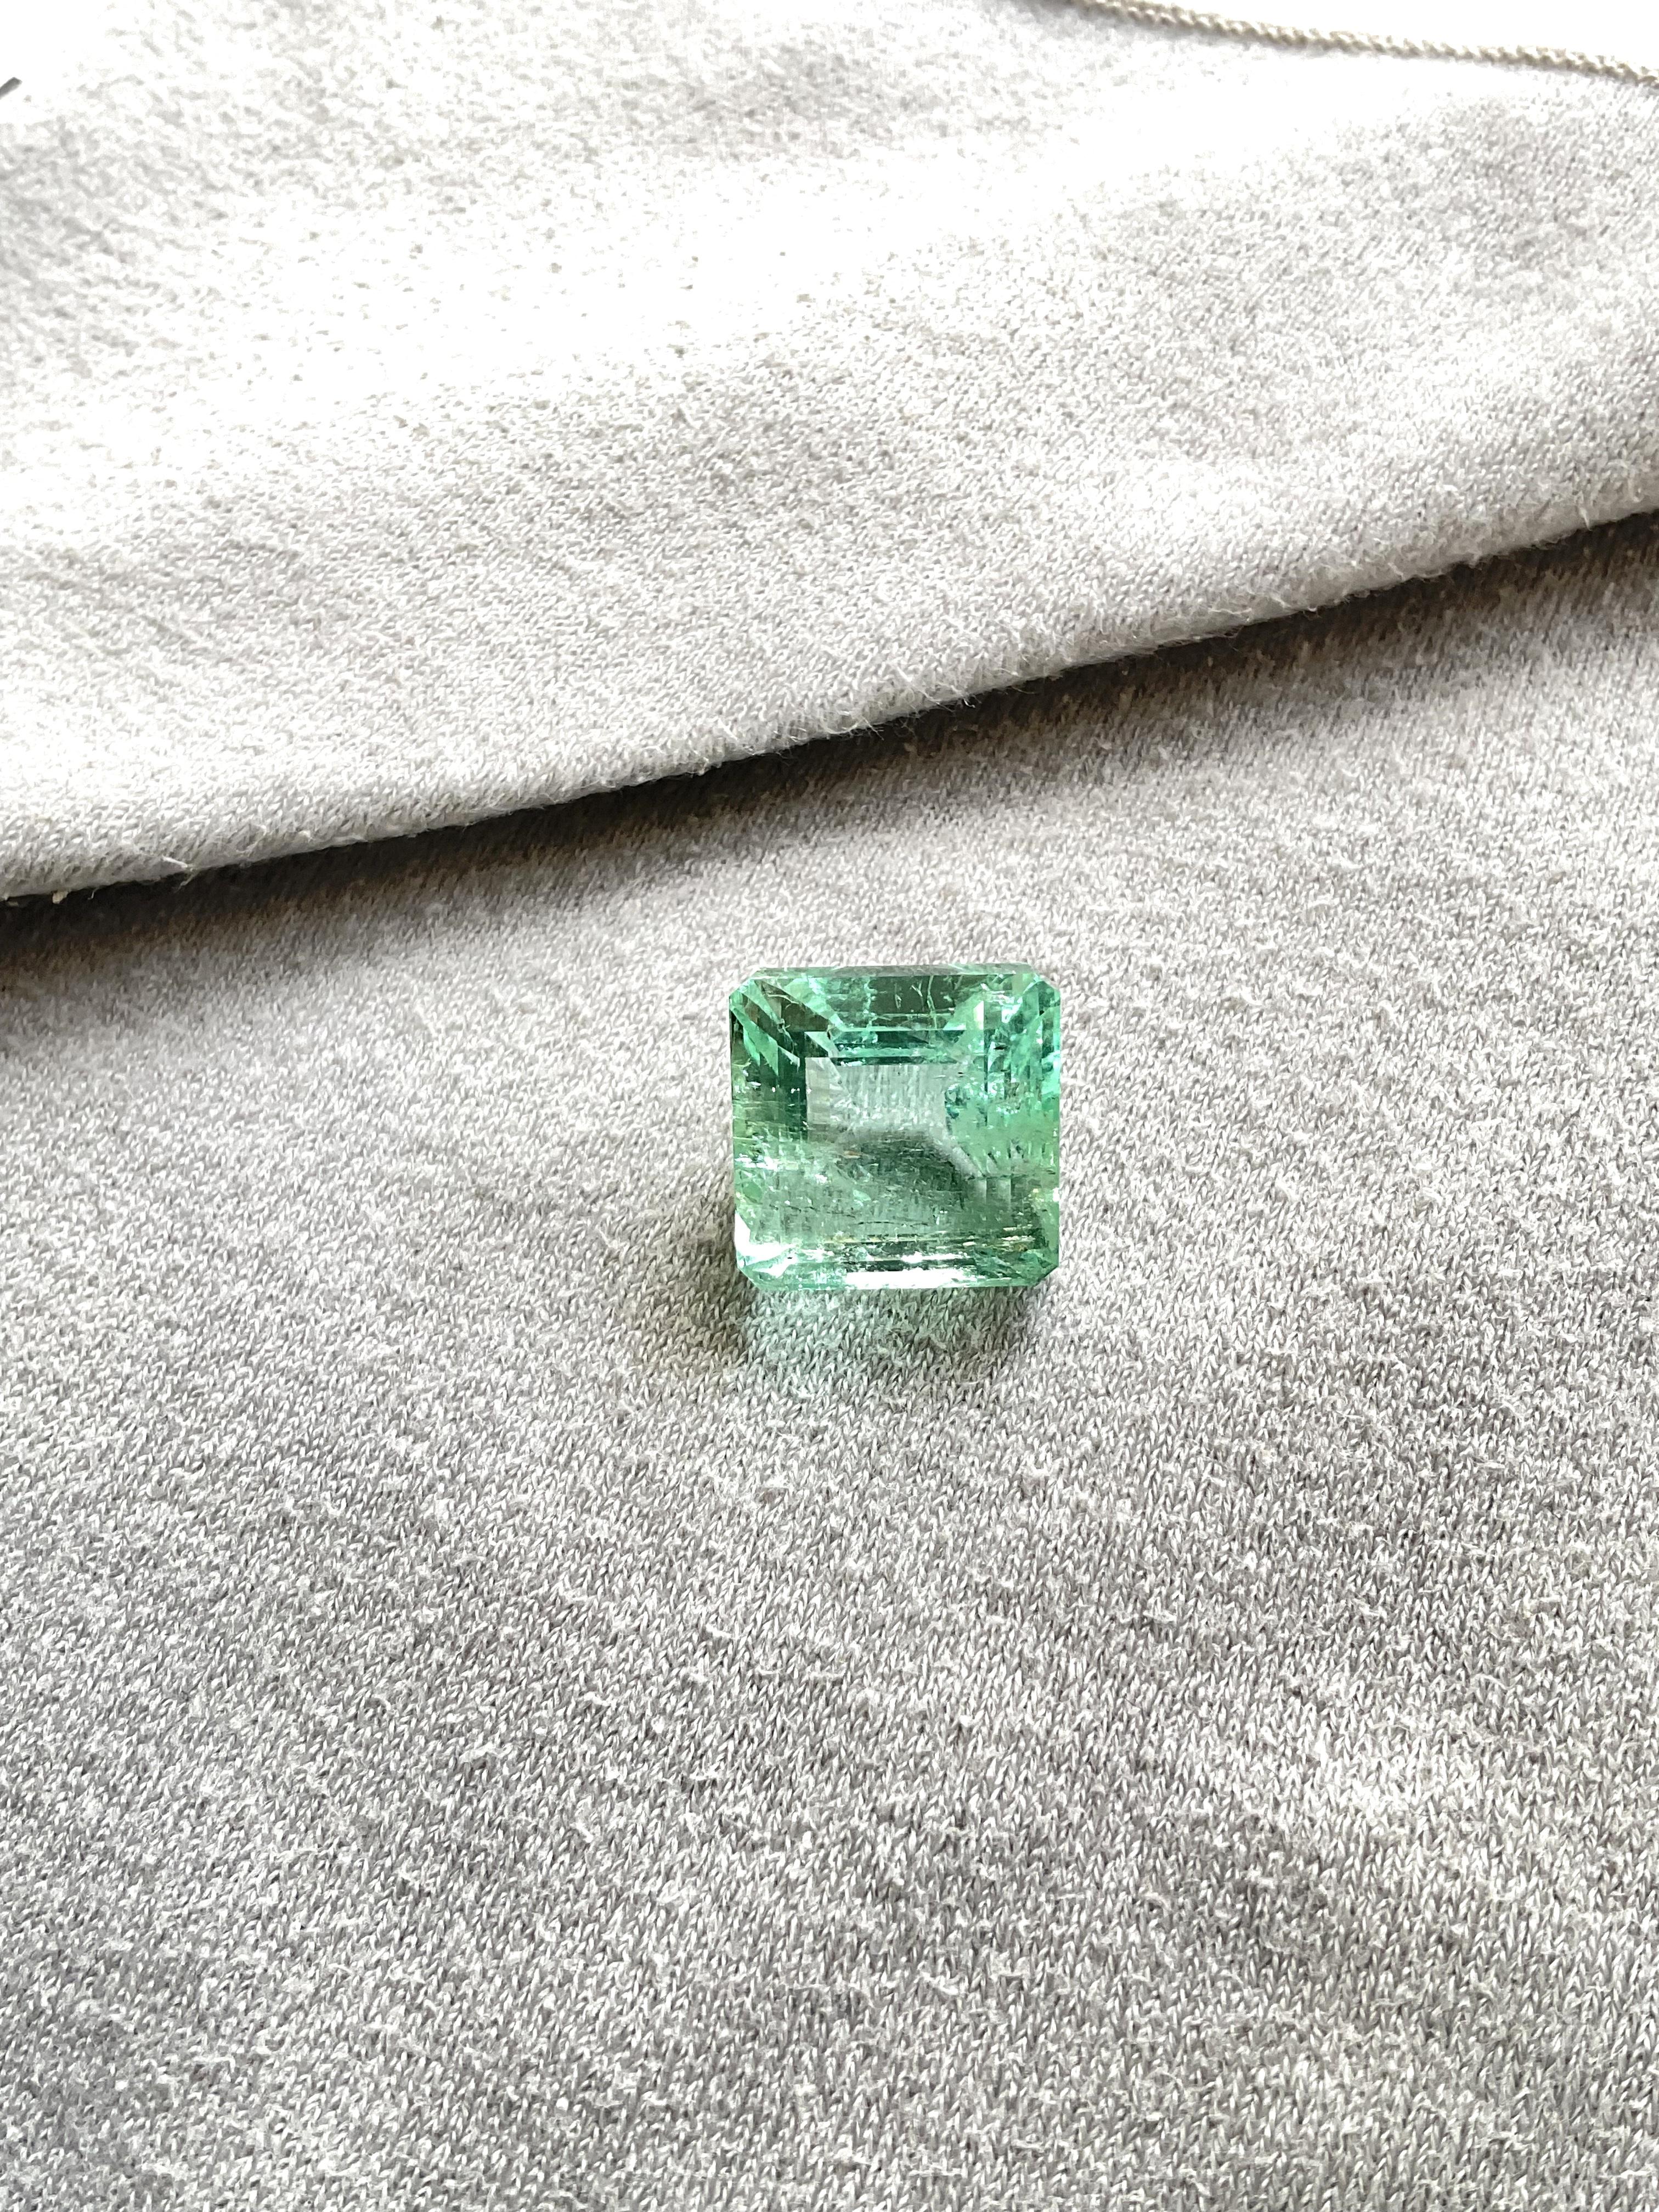 20.82 Carat Russian Emerald Cushion Cut for Fine Jewelry Natural emerald Gem For Sale 1